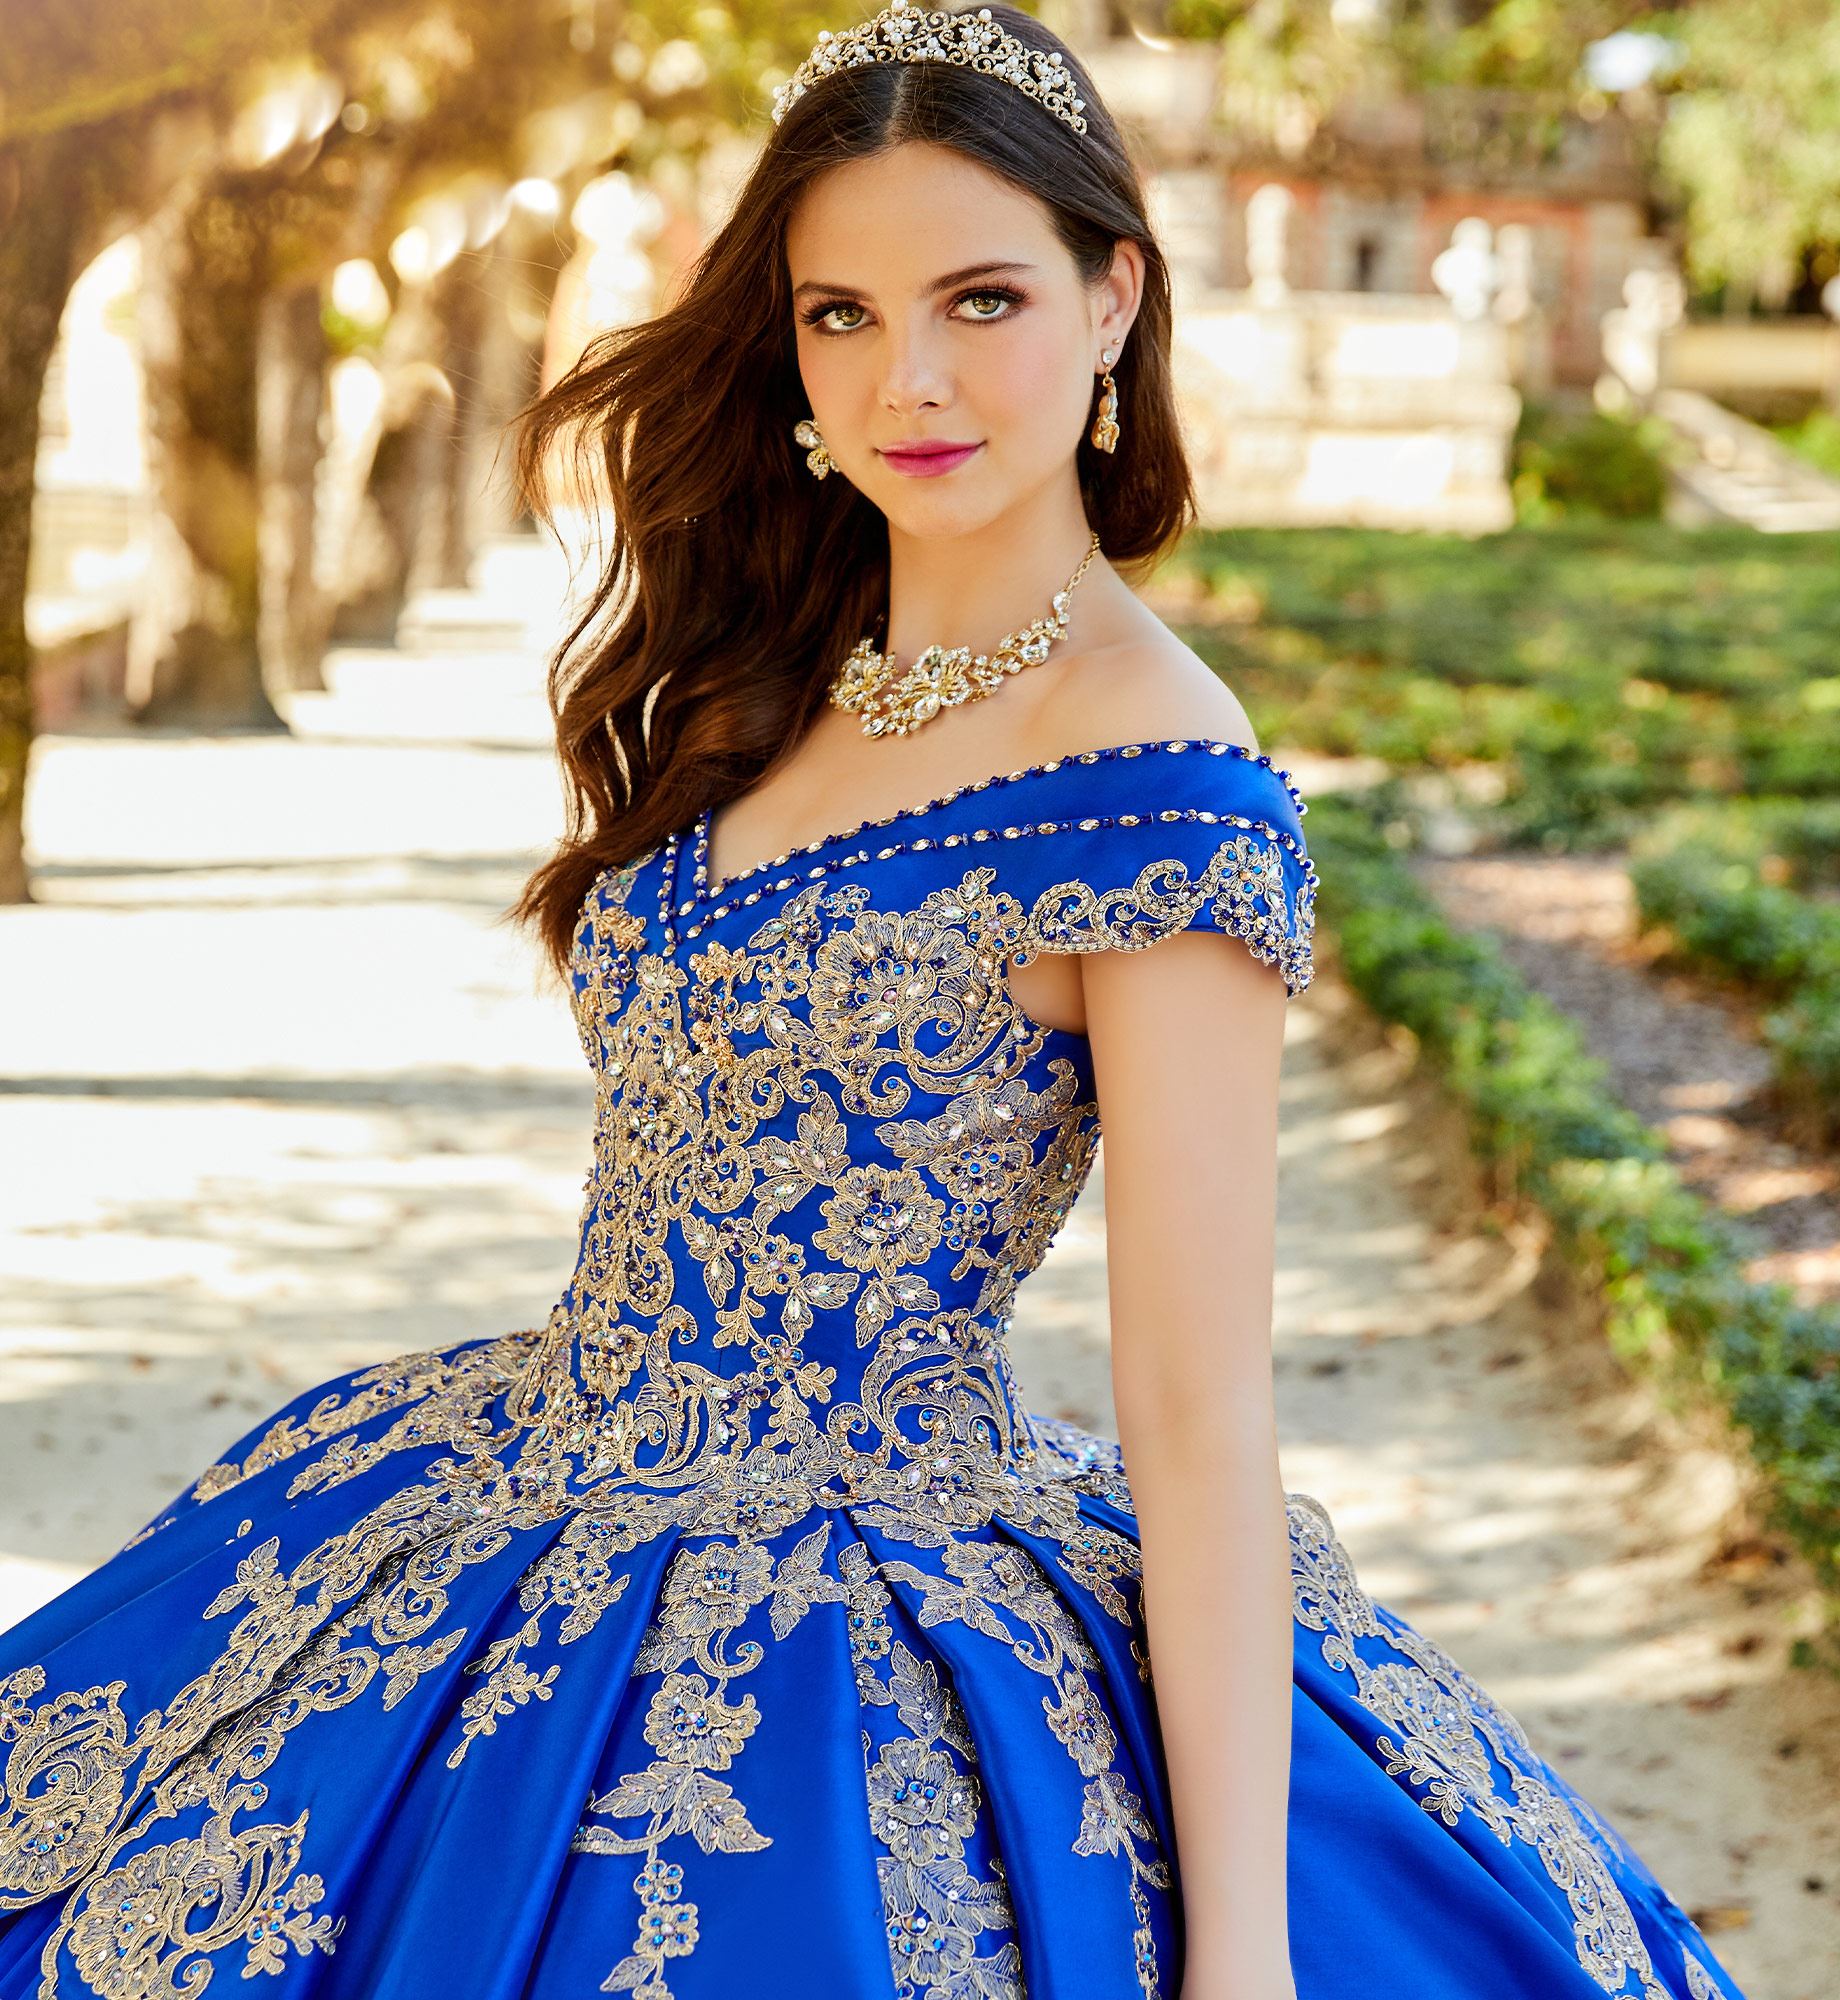 Brunette model in bright blue and gold quinceañera dress